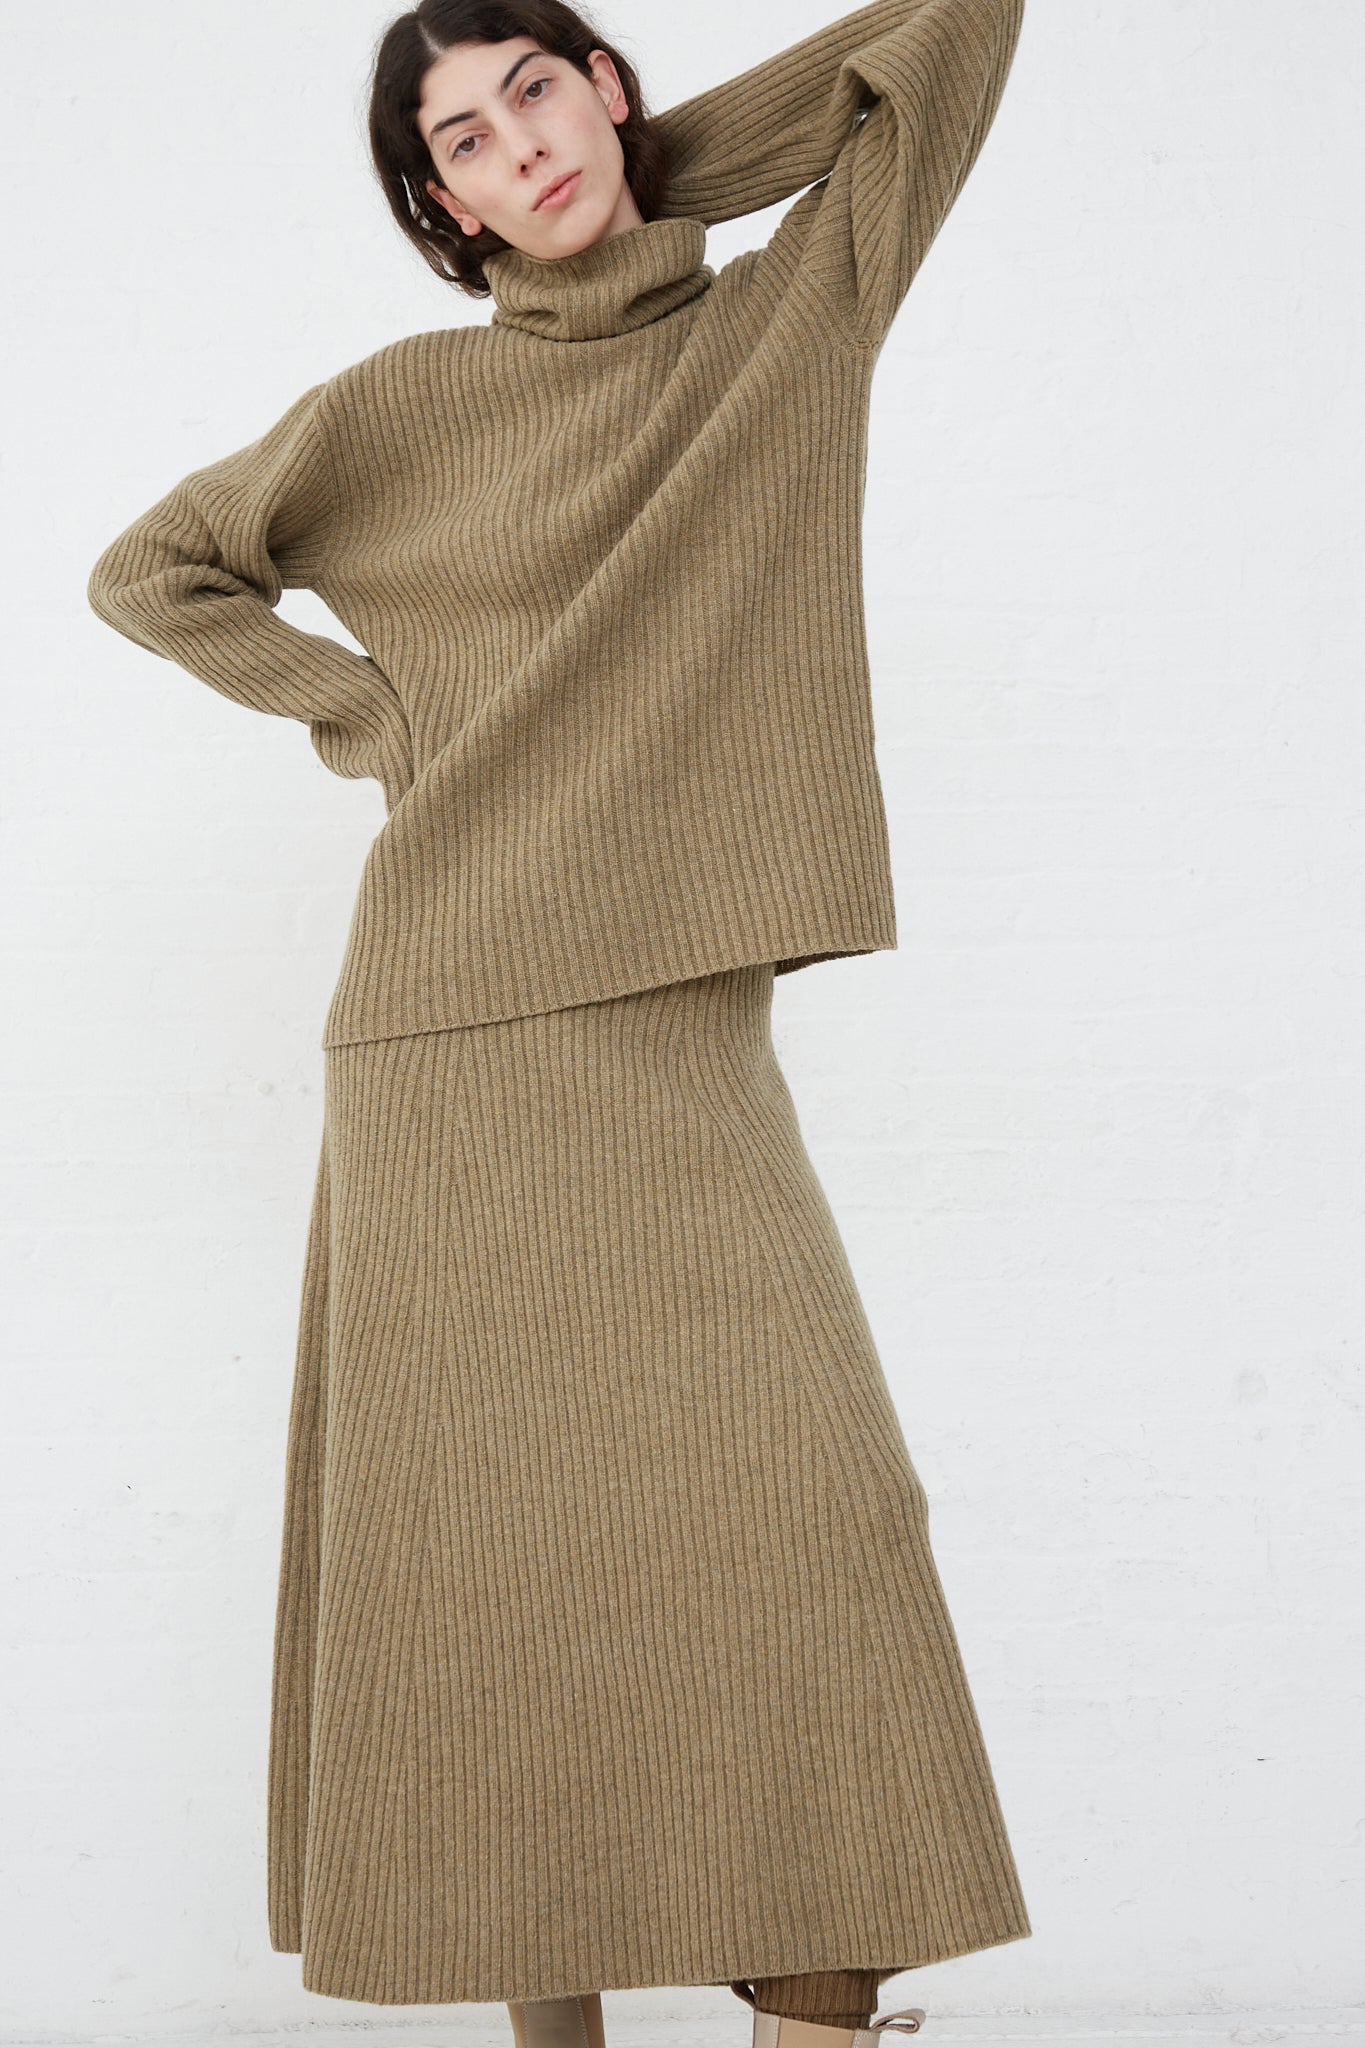 A model wearing an Ichi Antiquités wool rib knit skirt in Mocha and long skirt with an elasticated waist.